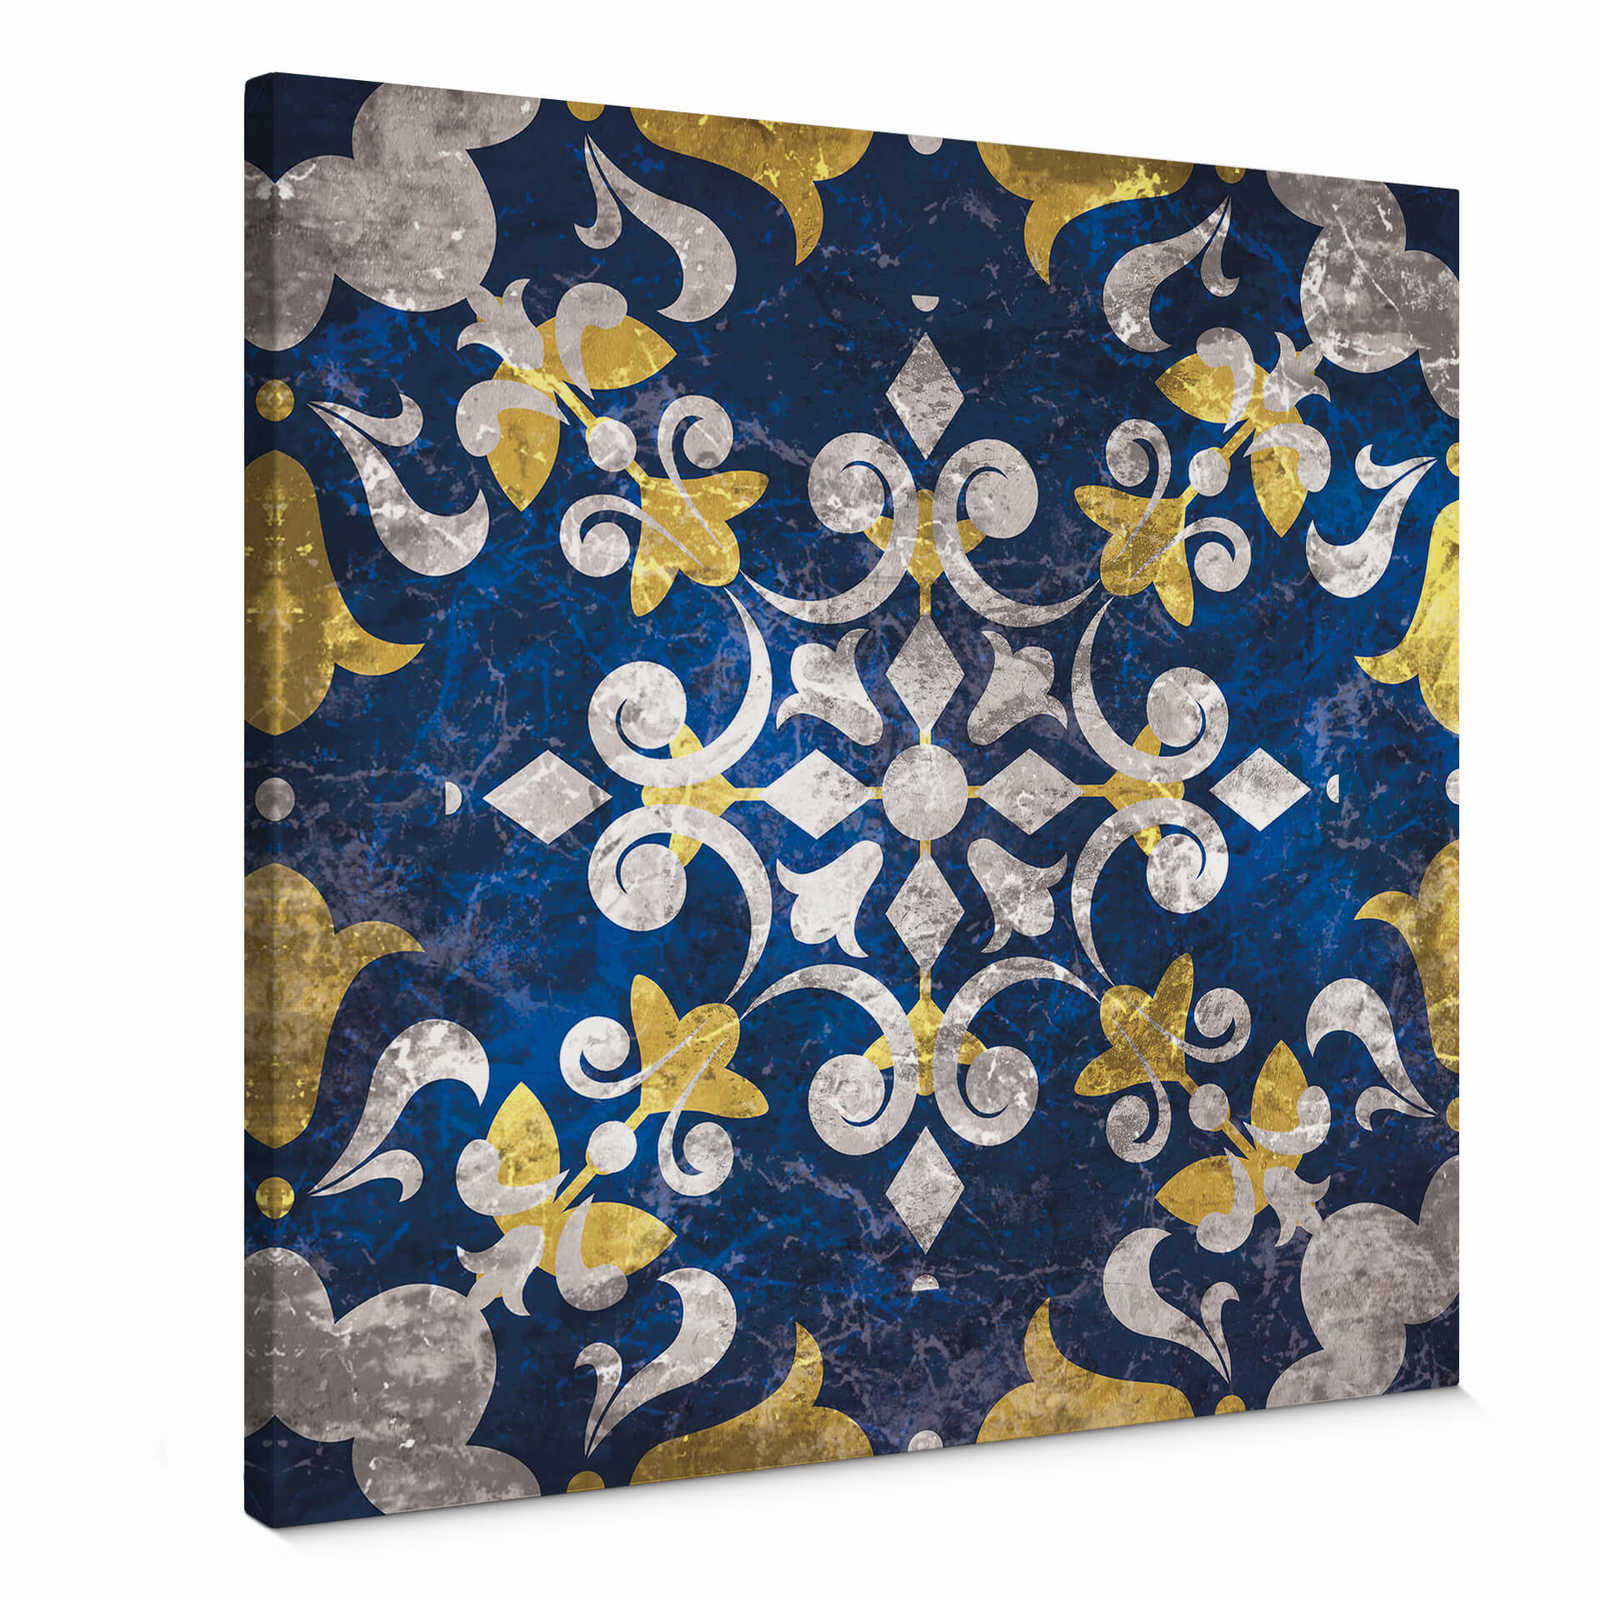         Square Canvas print oriental tile pattern – blue, yellow
    